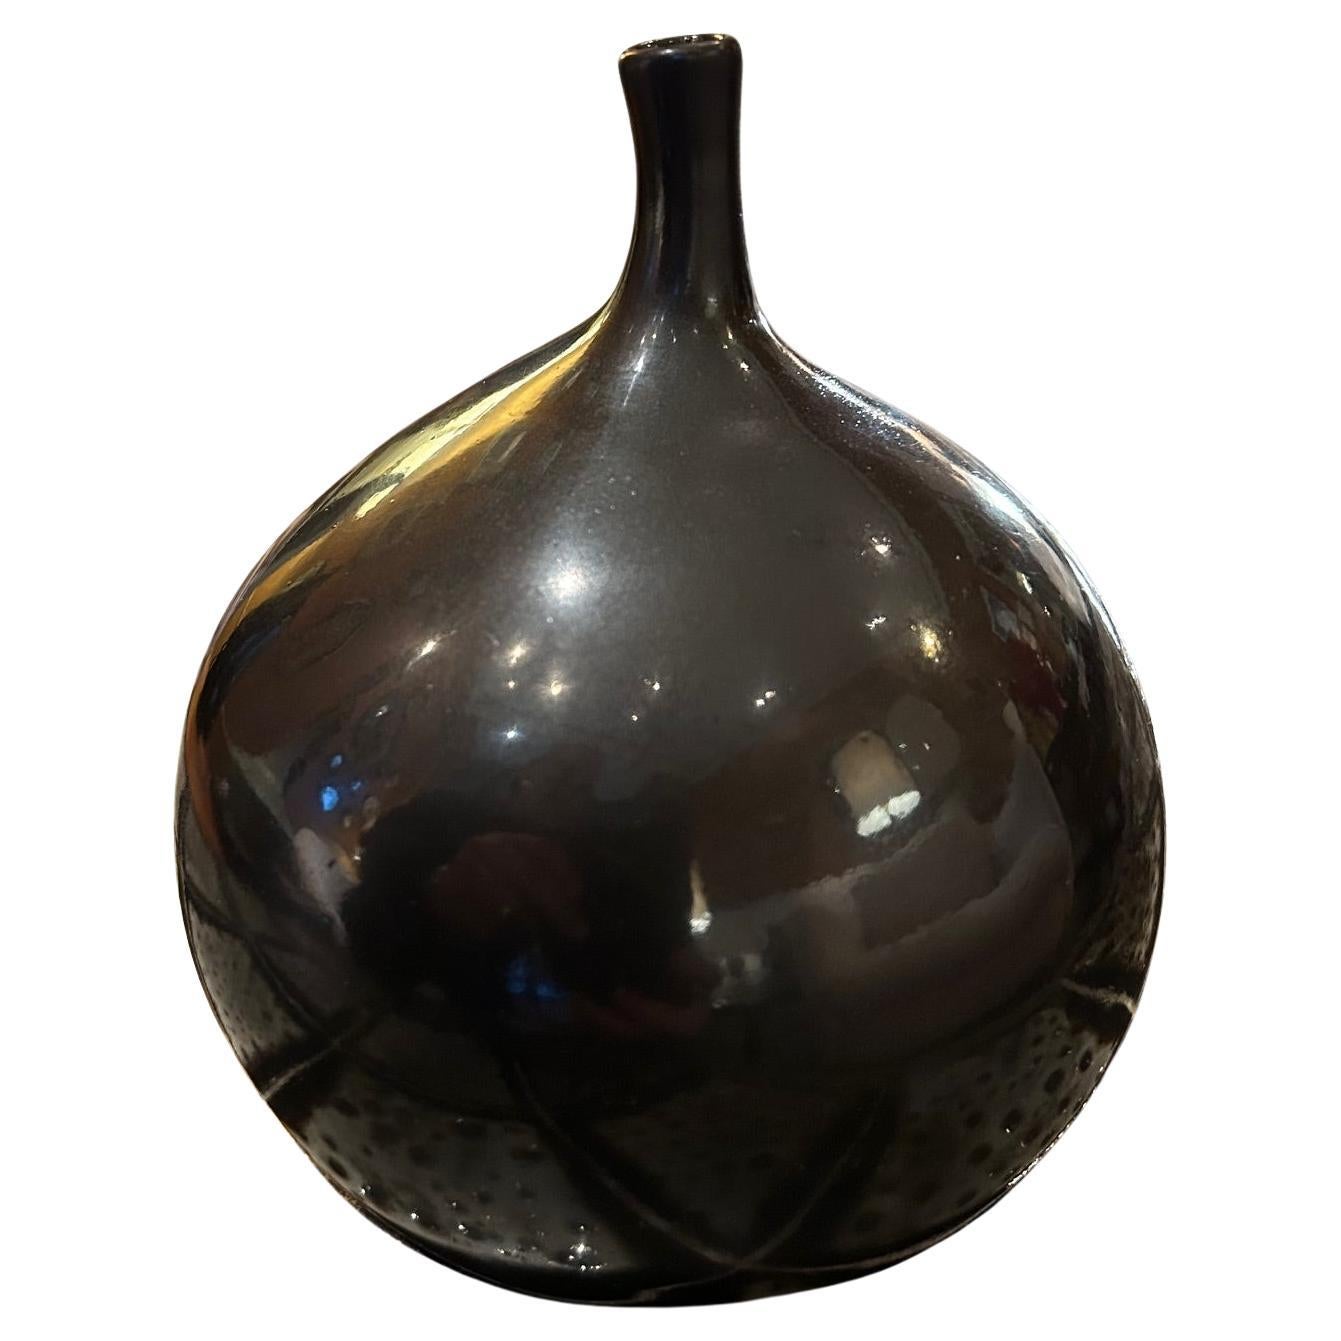 Ceramic "apple" vase by Georges Jouve, France, 1950's